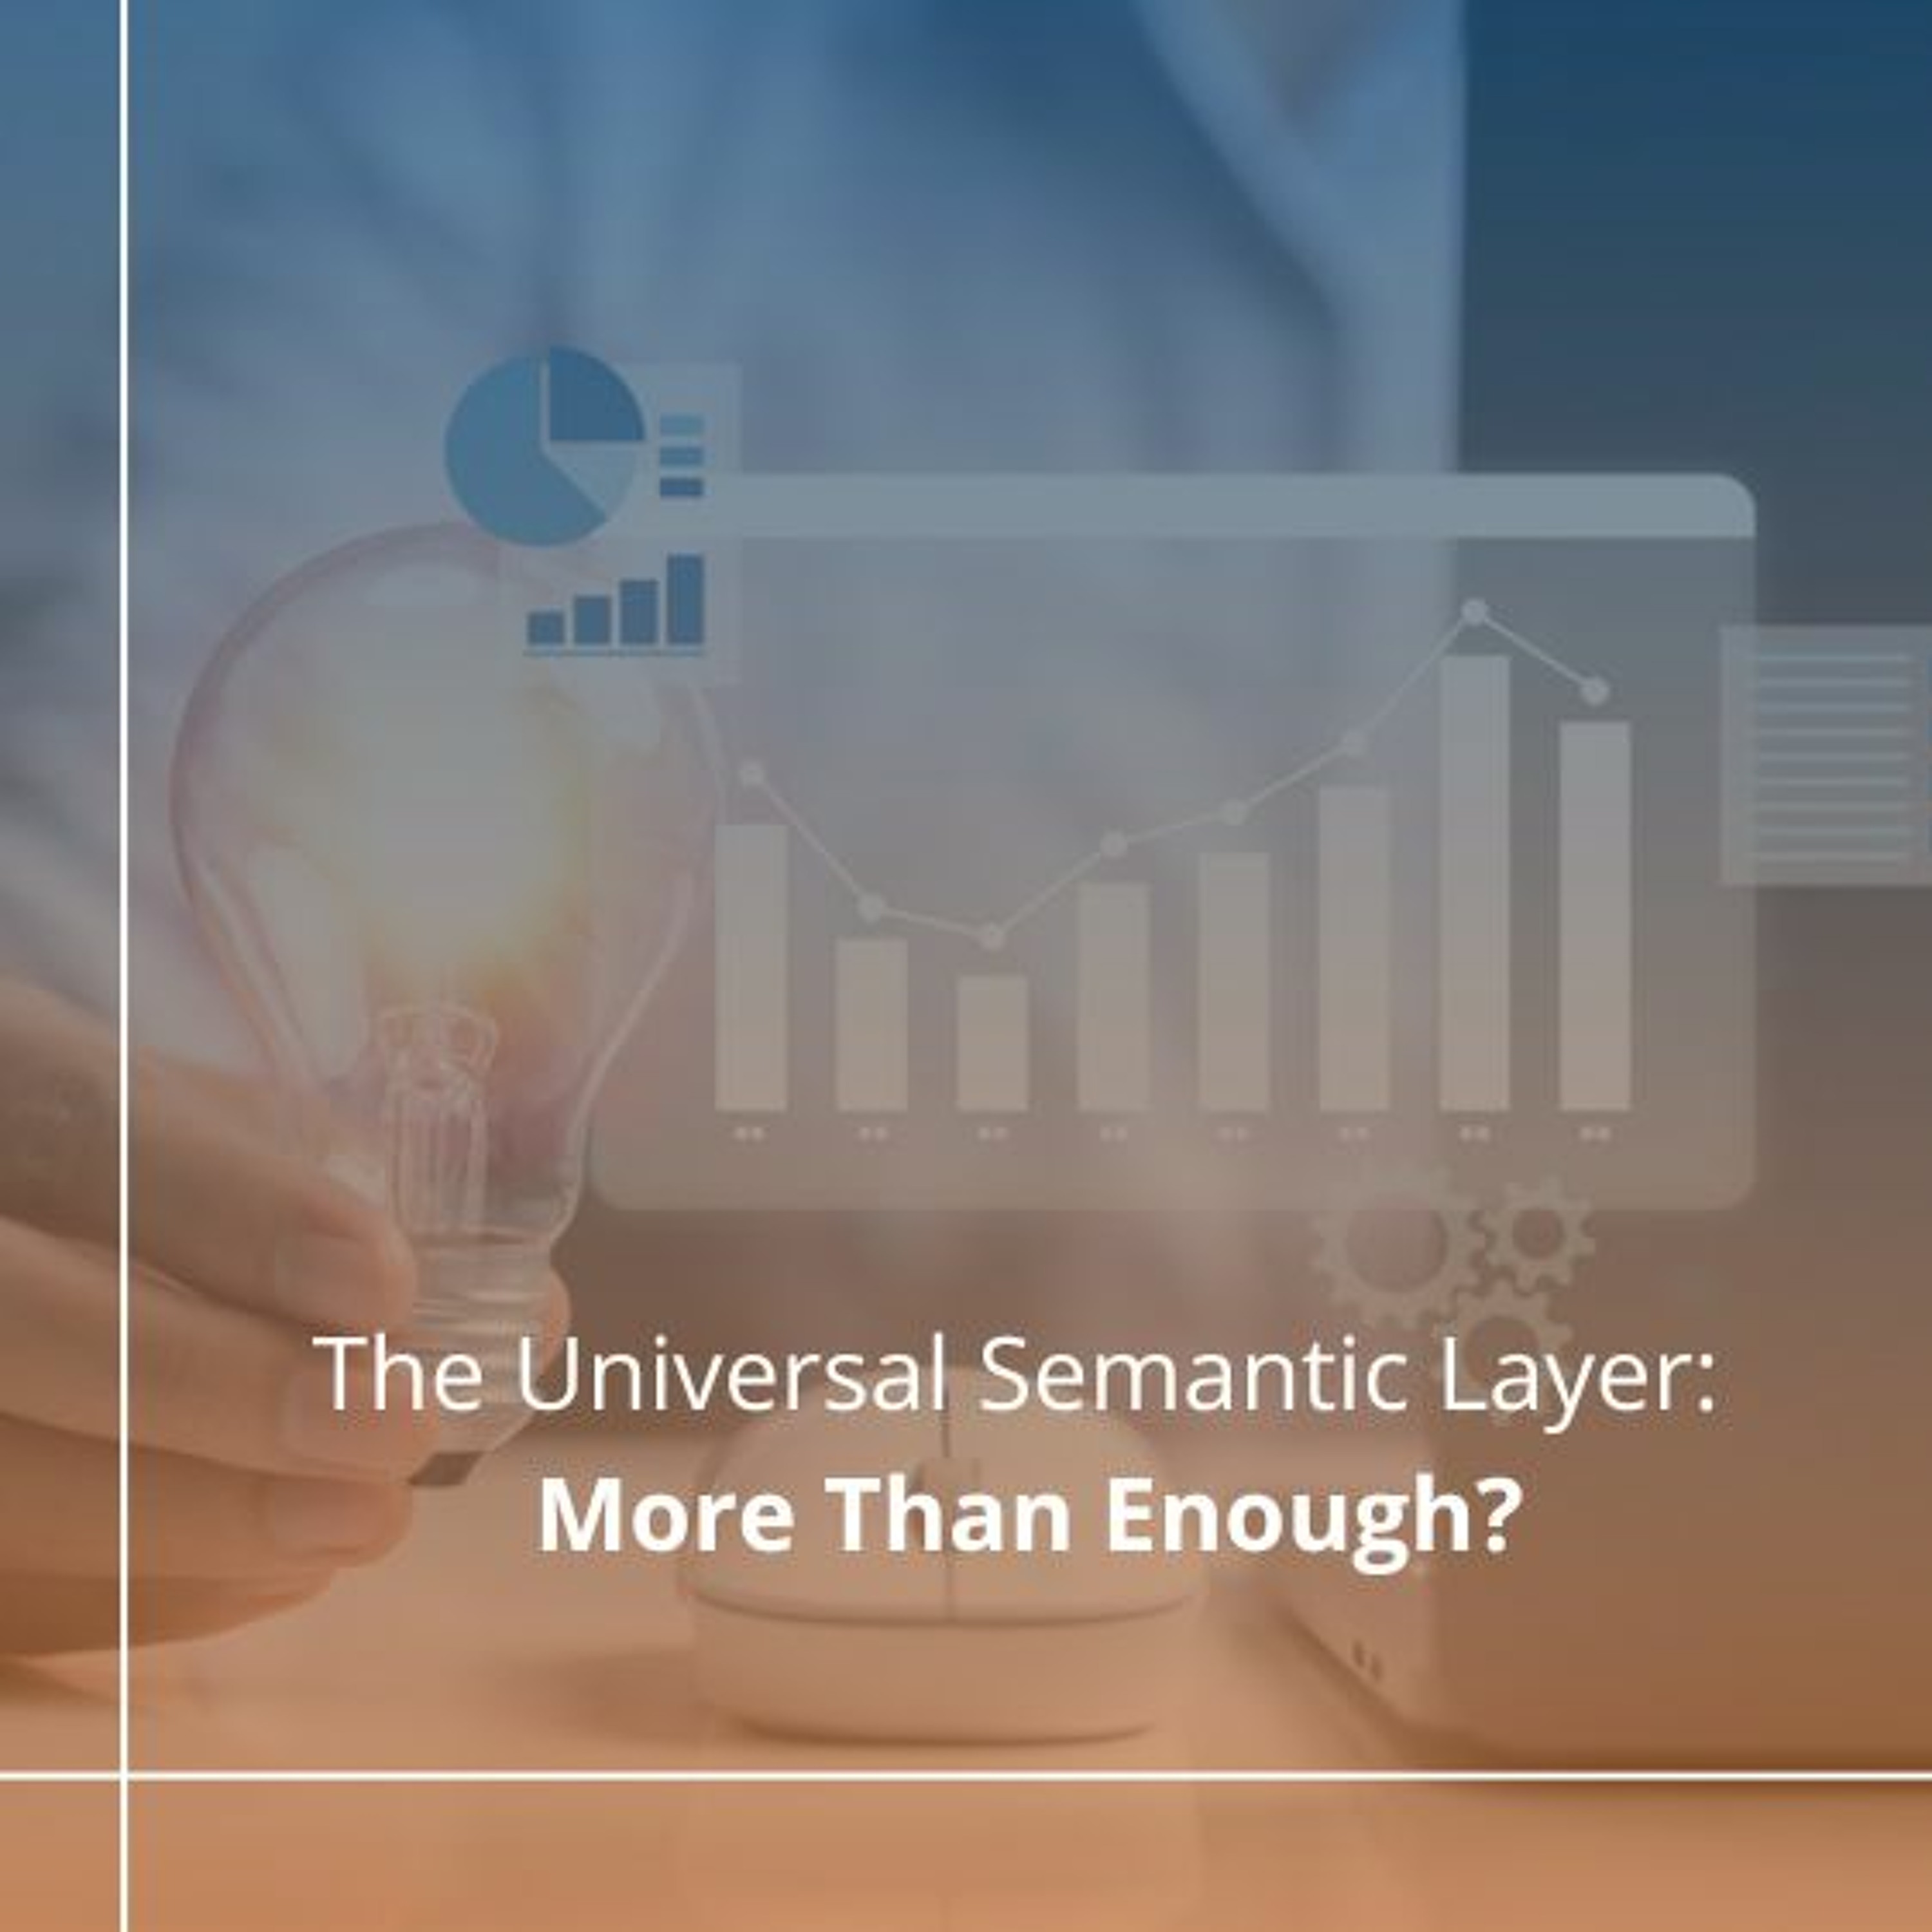 The Universal Semantic Layer: More Than Enough?